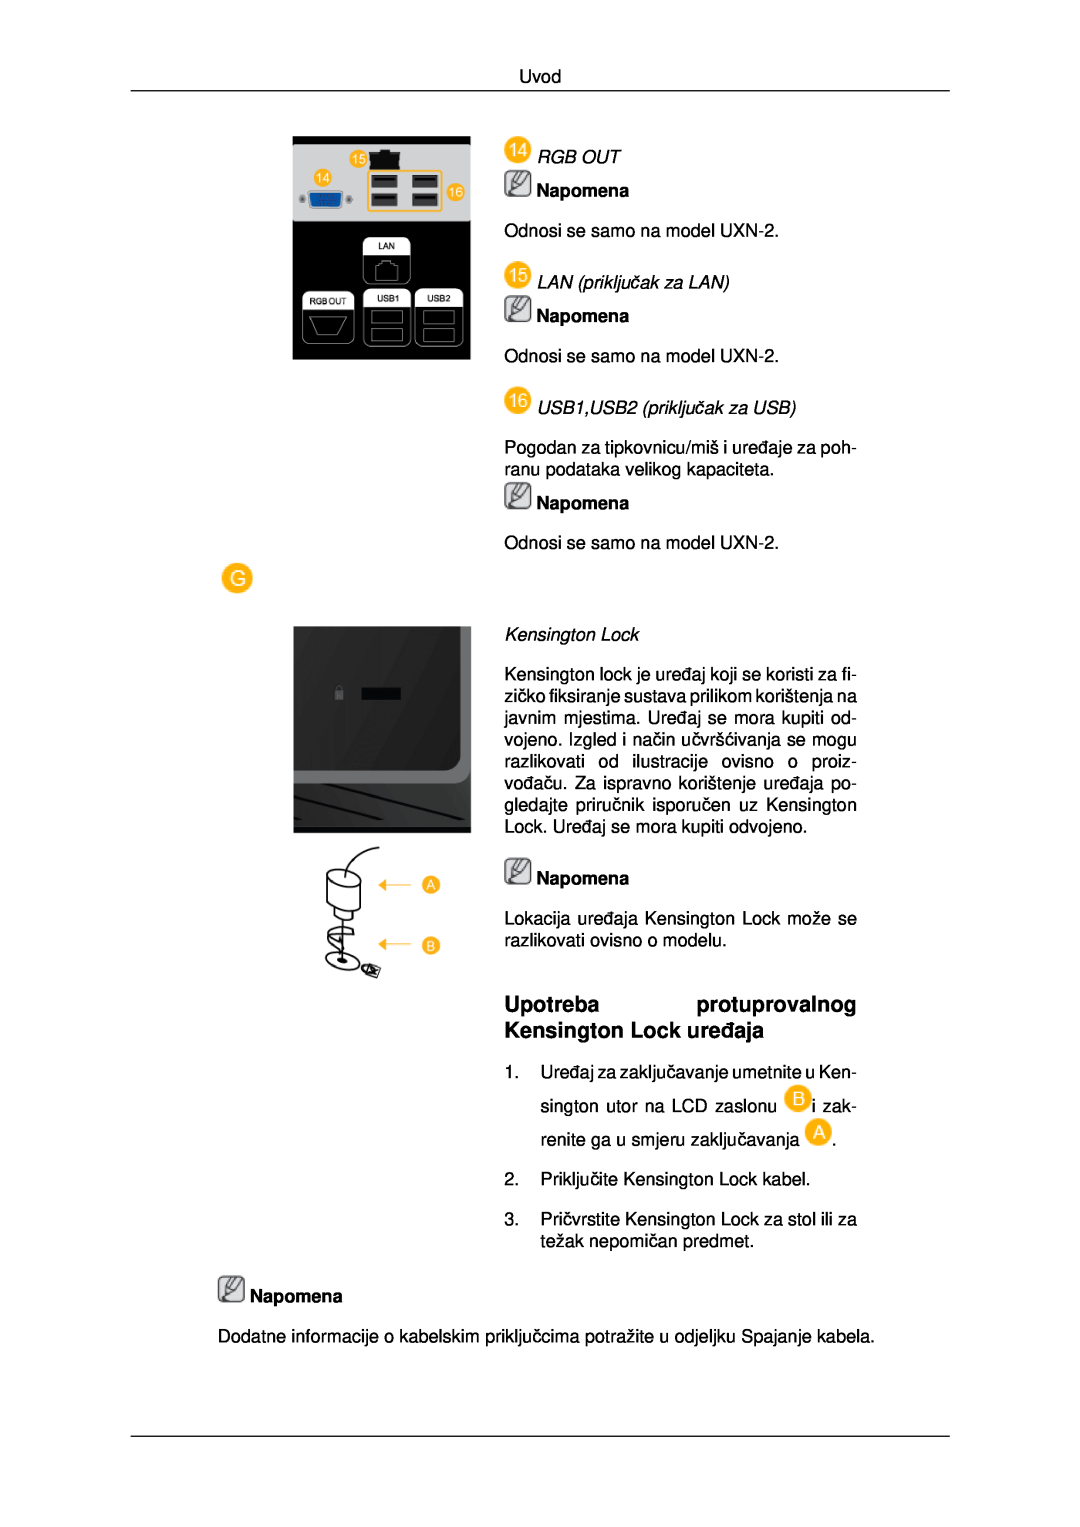 Samsung LH46MRTLBC/EN manual Upotreba protuprovalnog Kensington Lock uređaja, Rgb Out, LAN priključak za LAN, Napomena 